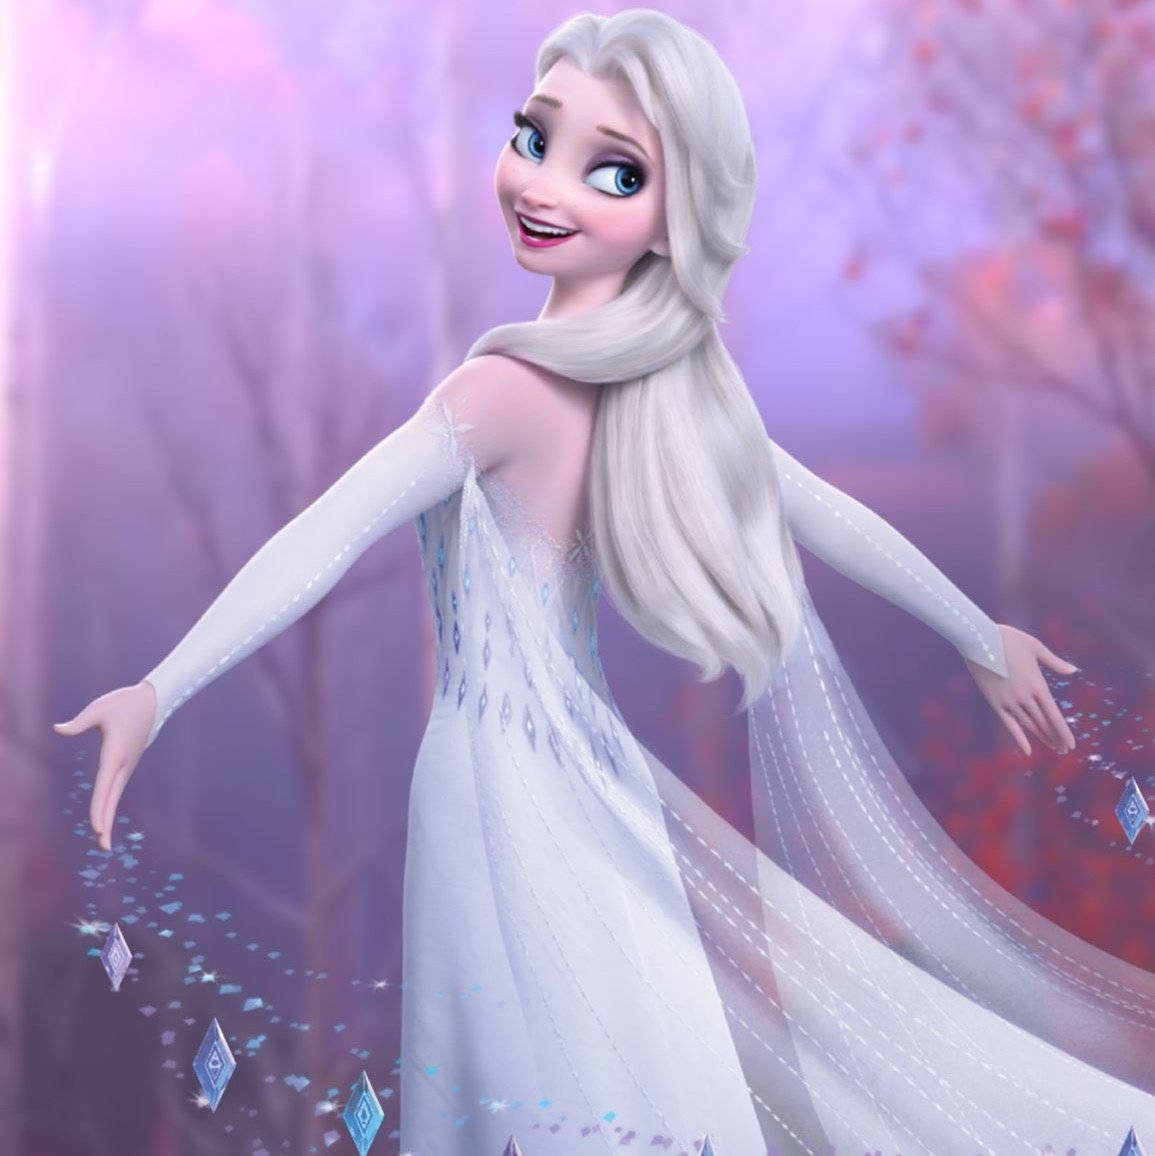 Elsa From Frozen 2 Wallpaper